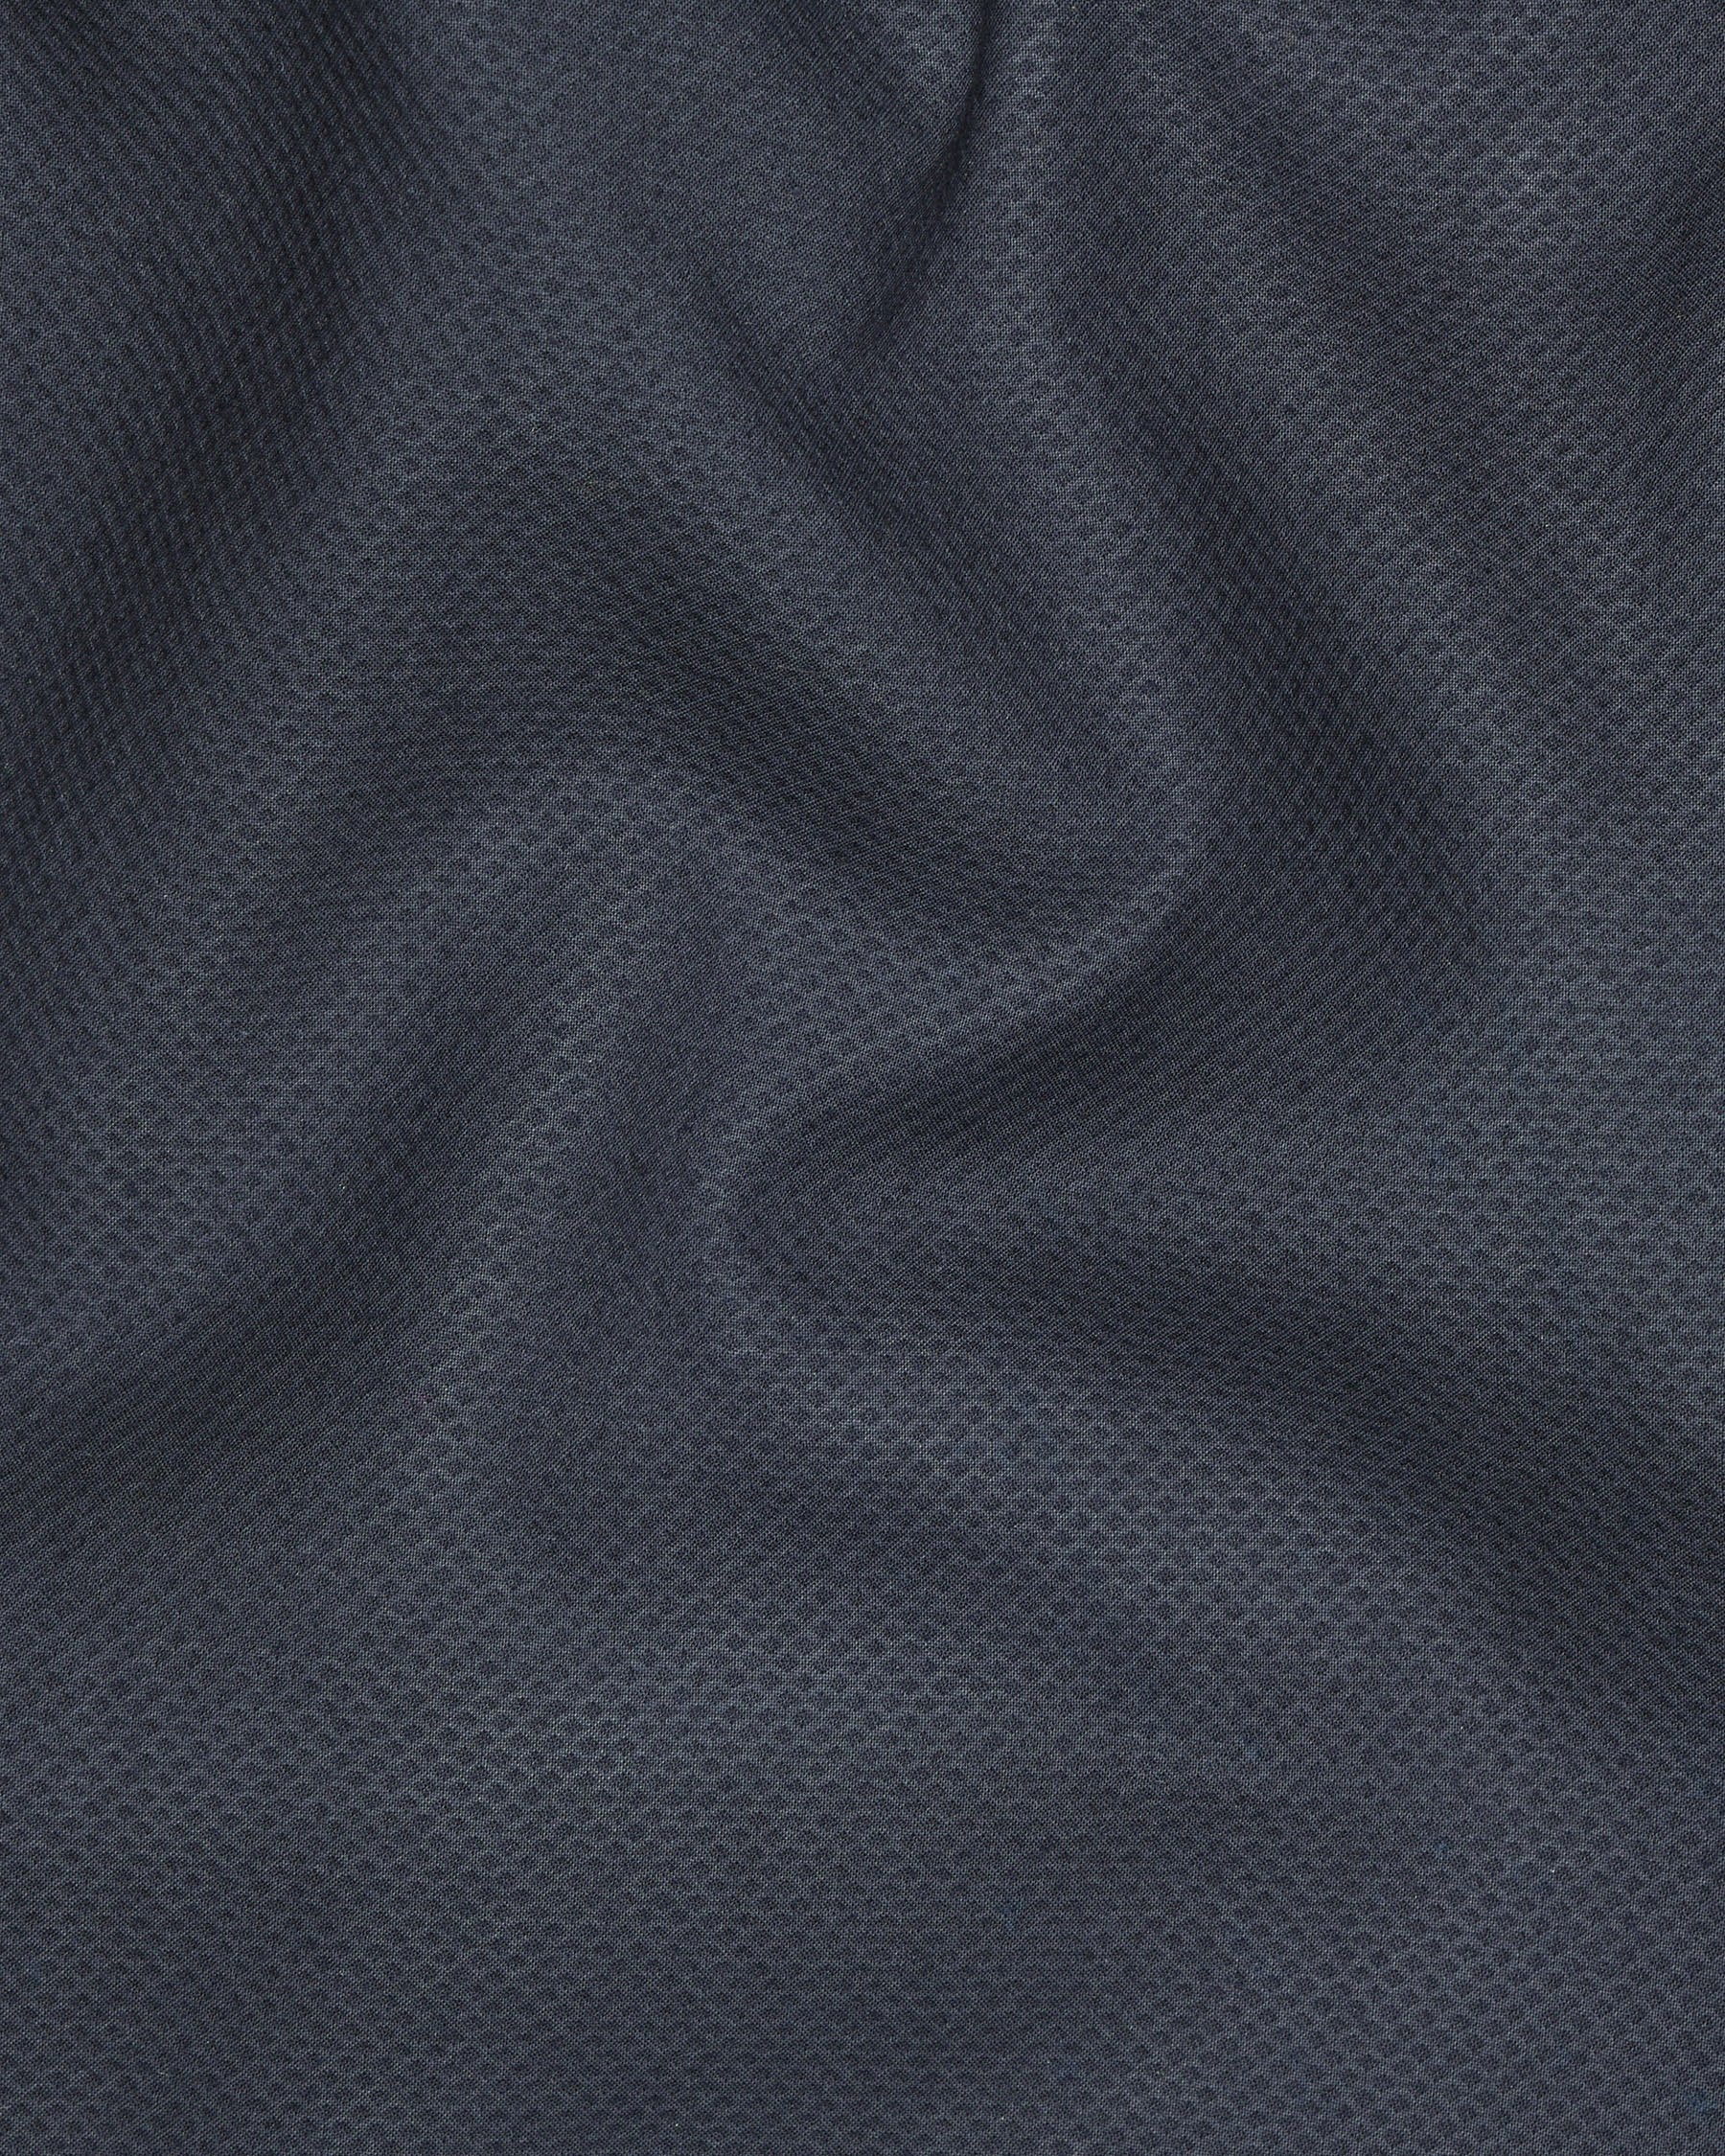 Anchor Grey Textured Cotton Suit